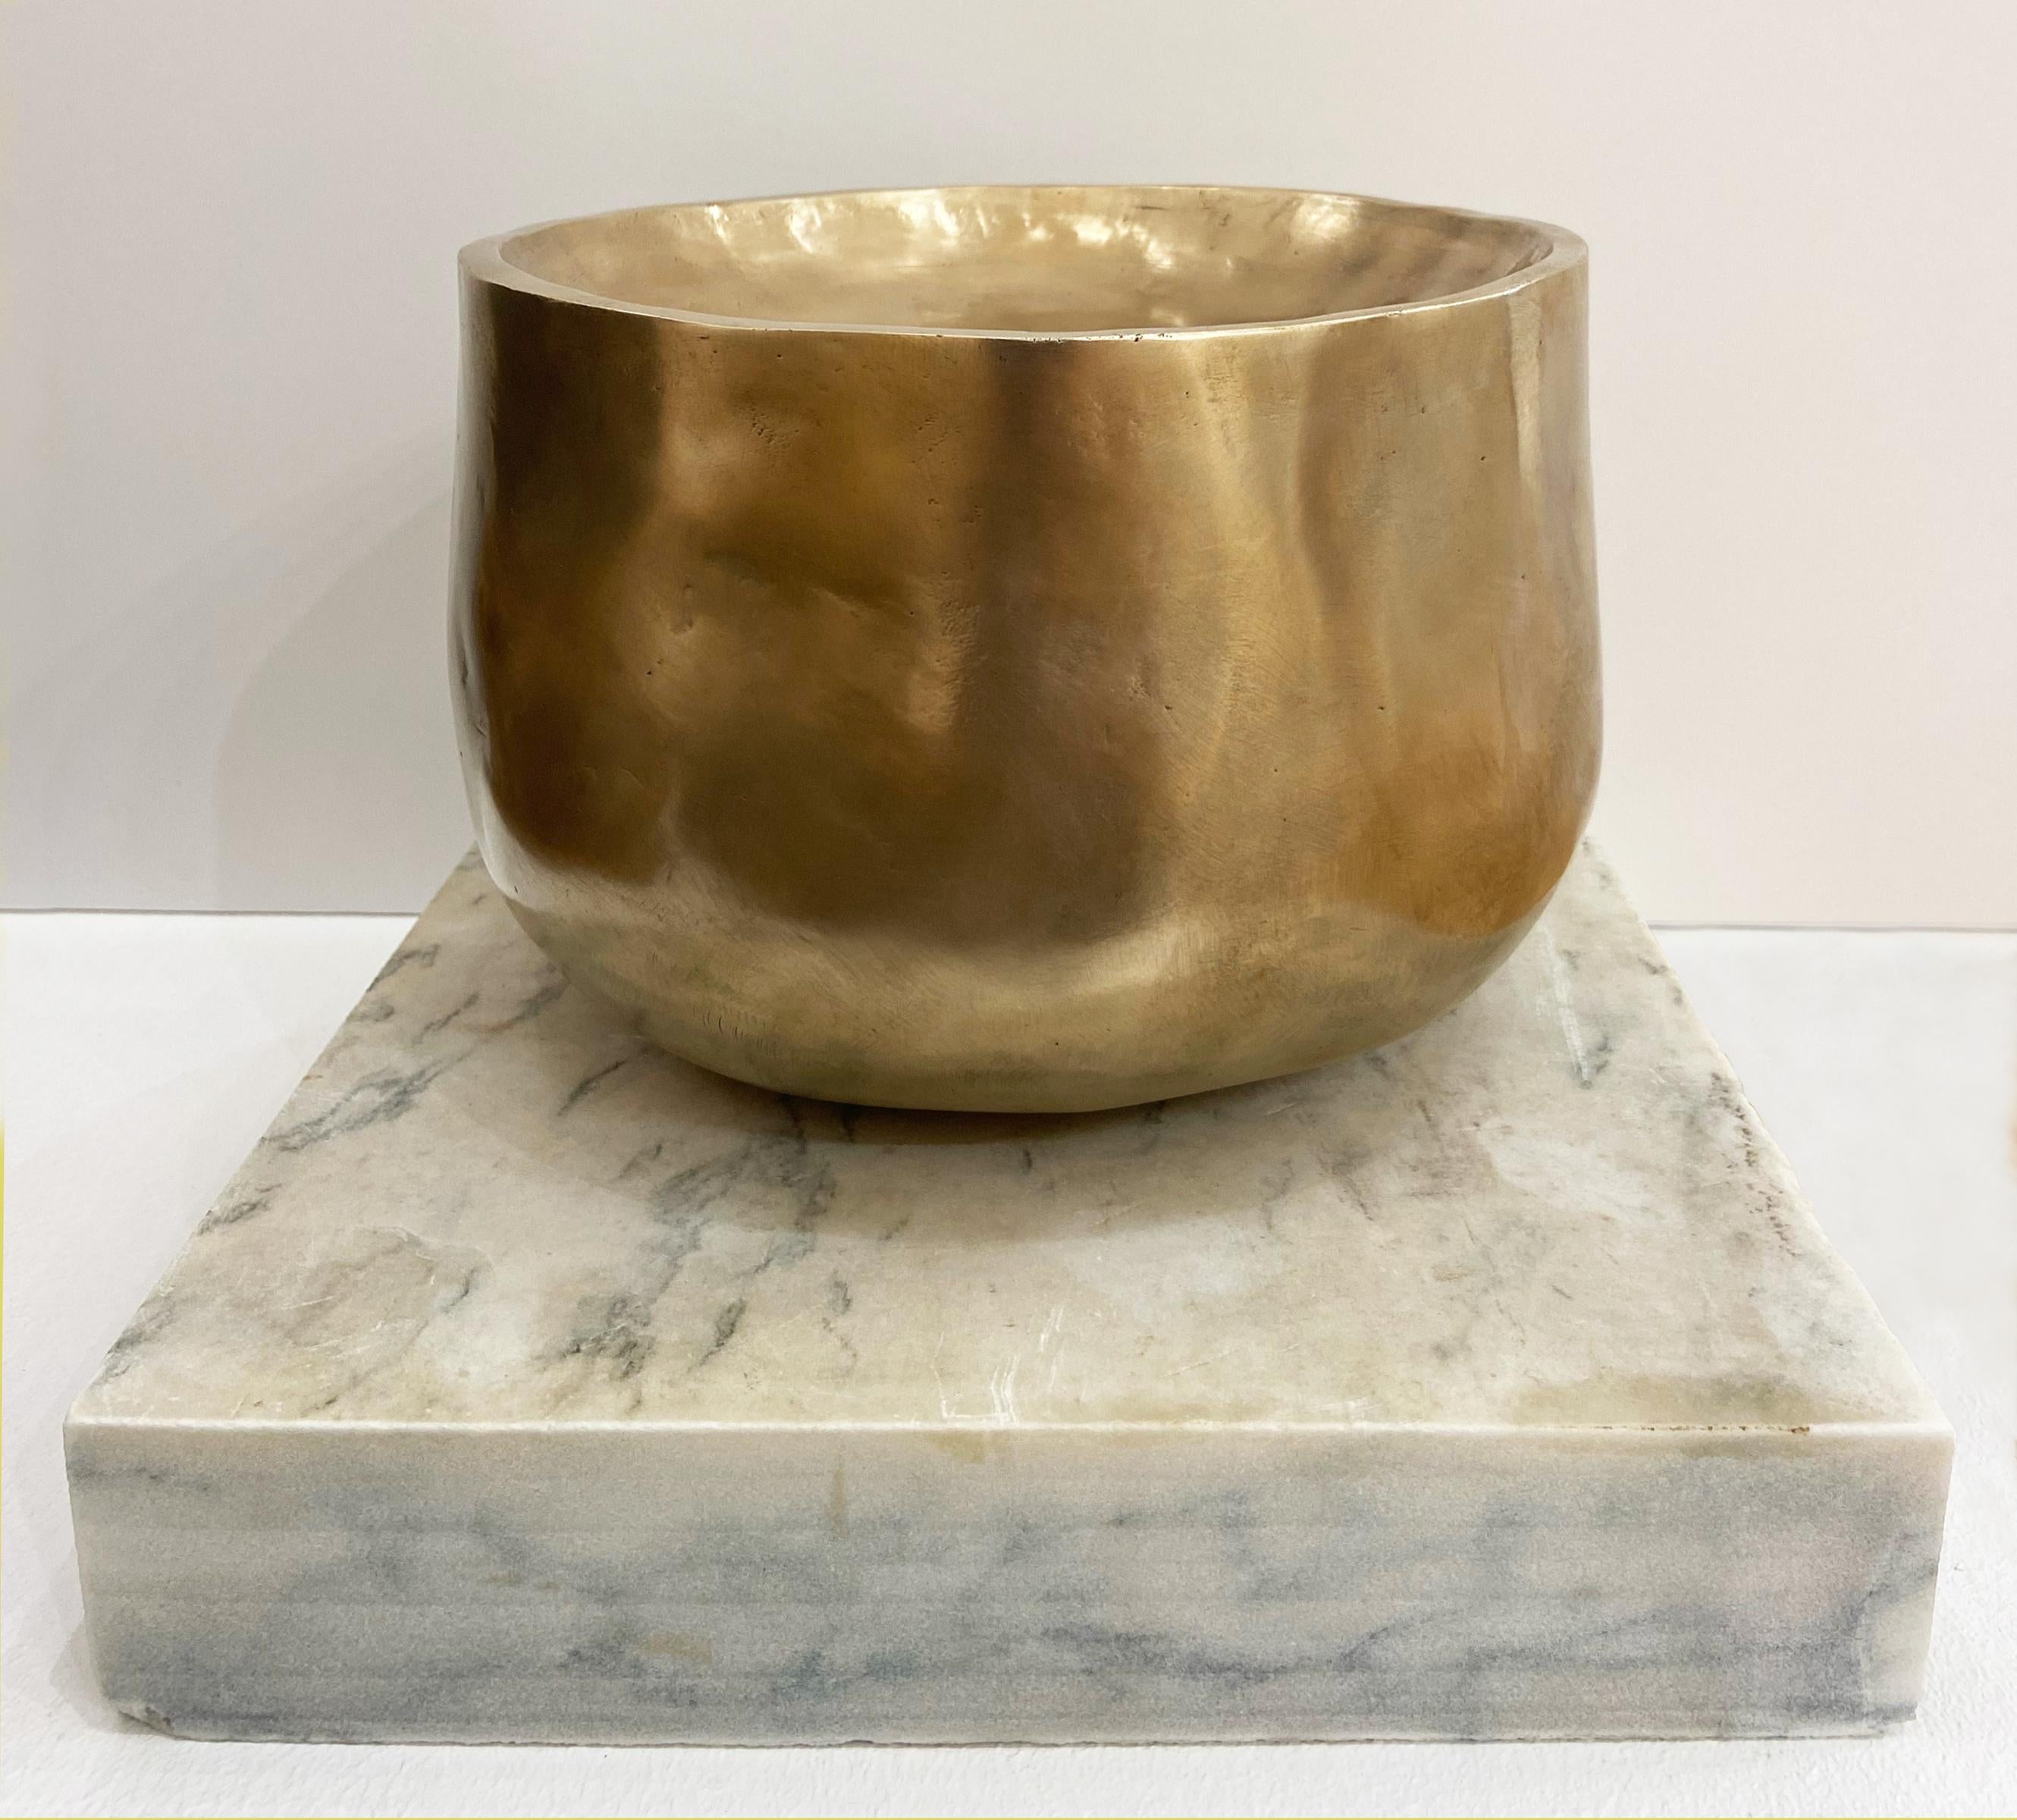 Susan Hable Abstract Sculpture - "Honey Pot" - abstract sculpture - Barbara Hepworth